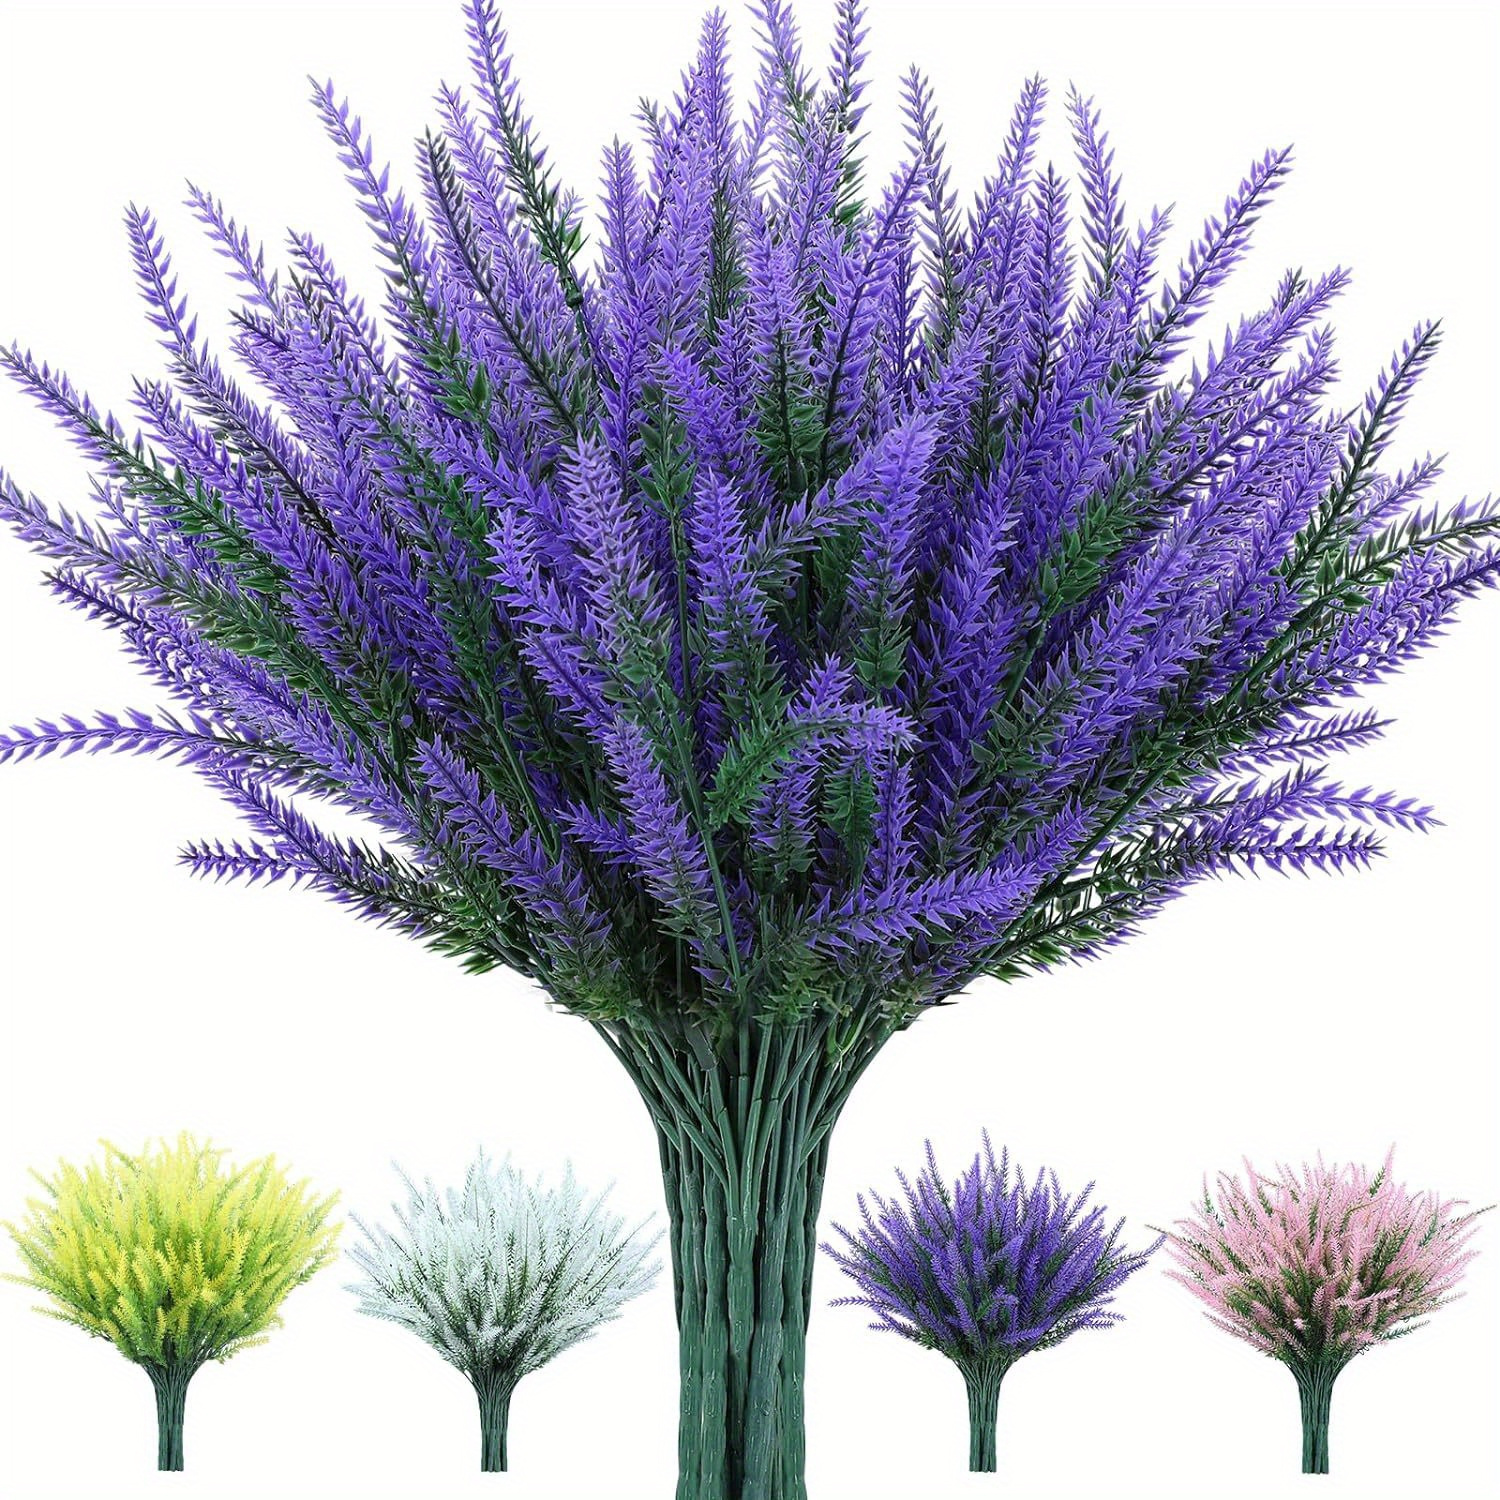 

12pcs Artificial Lavender Bouquets, Fake Flowers For Outdoor Wedding, Garden, Home Decor, Table Centerpieces Decor, Spring Summer Decor